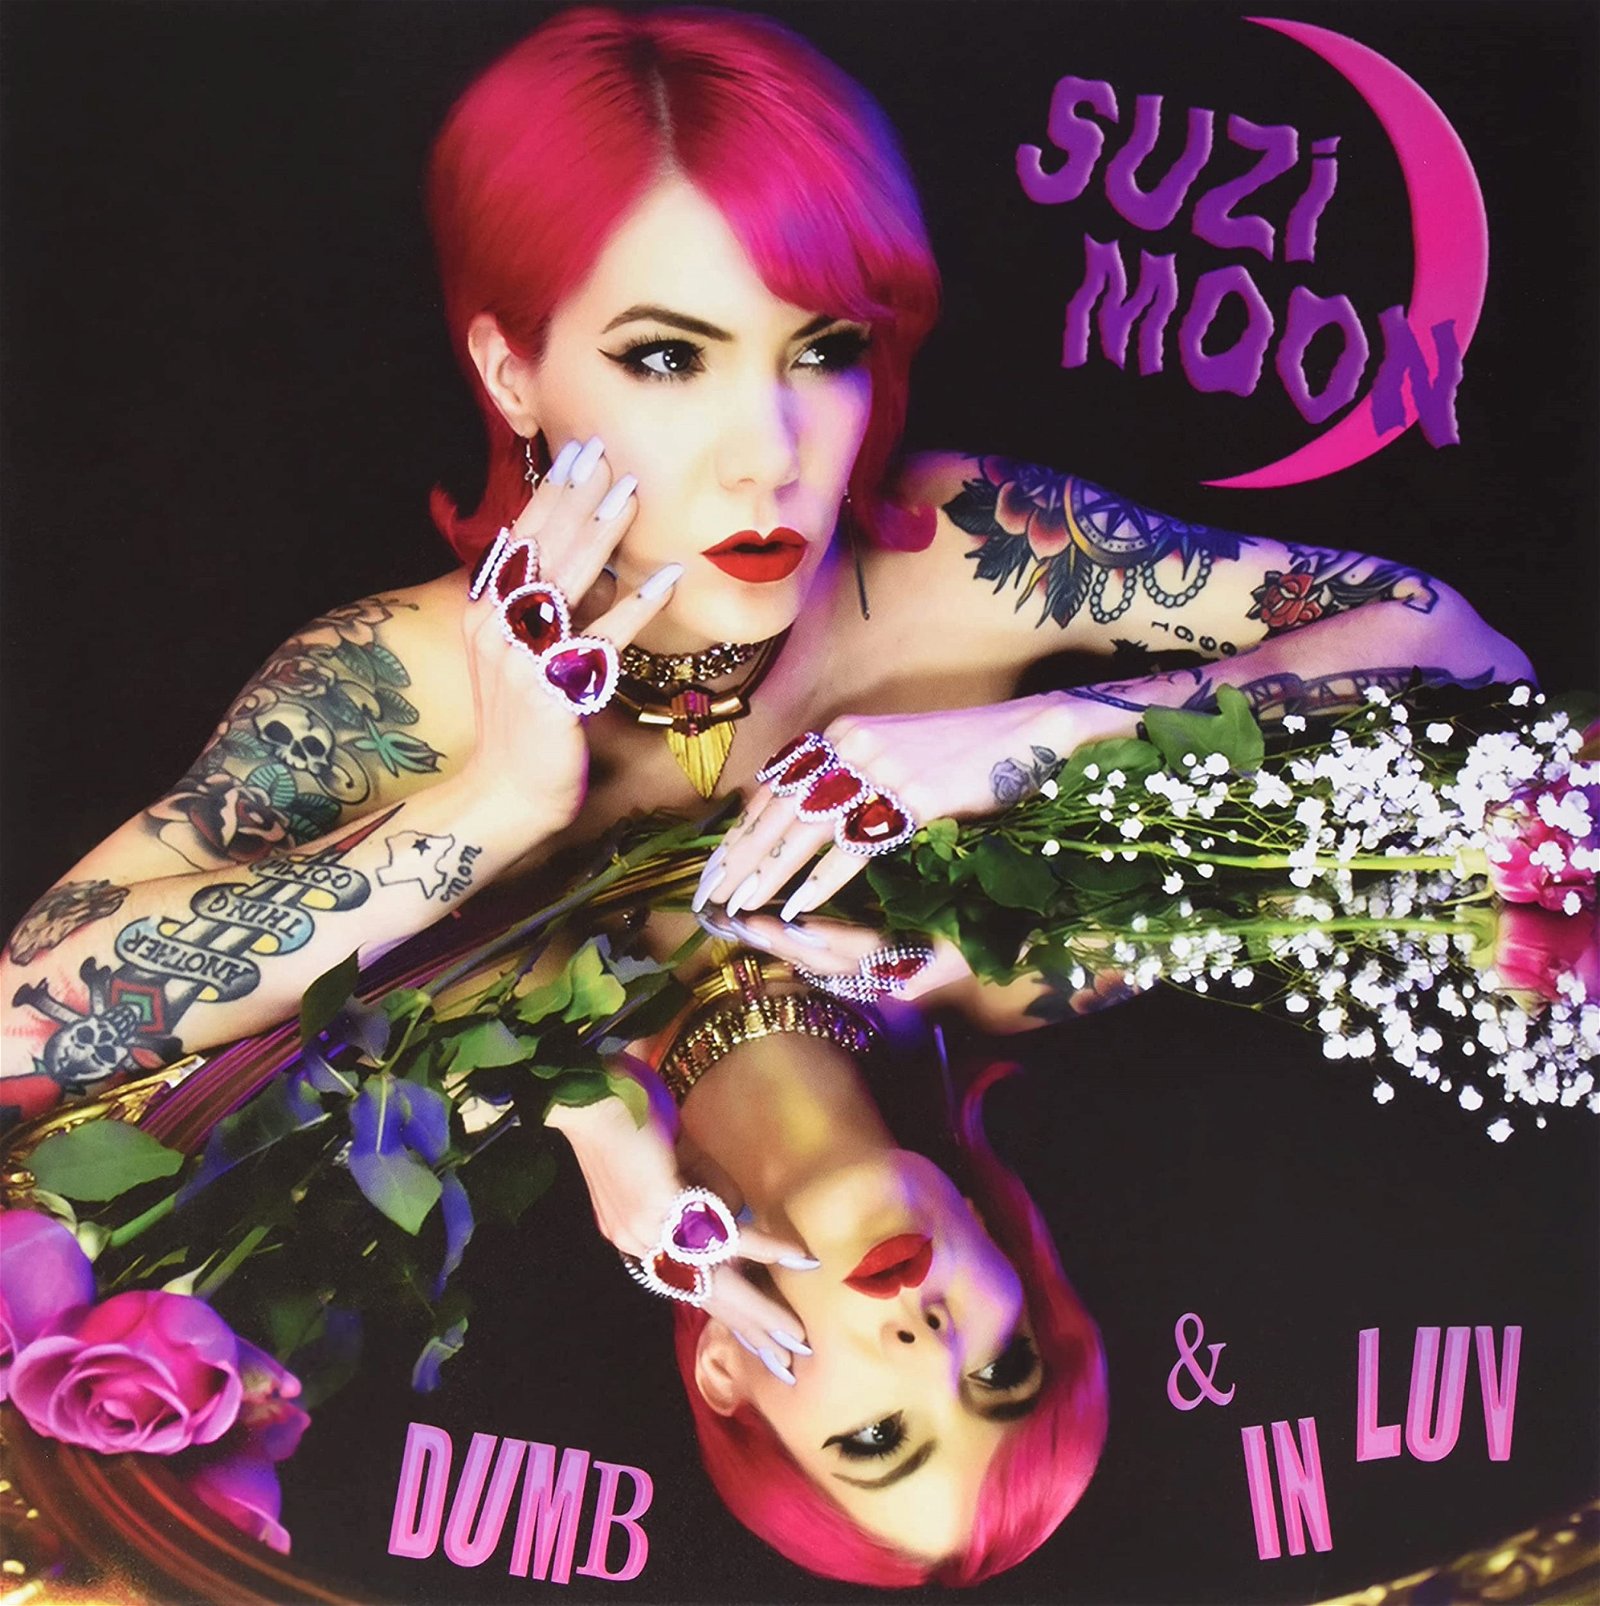 CD Shop - MOON, SUZI DUMB & IN LUV